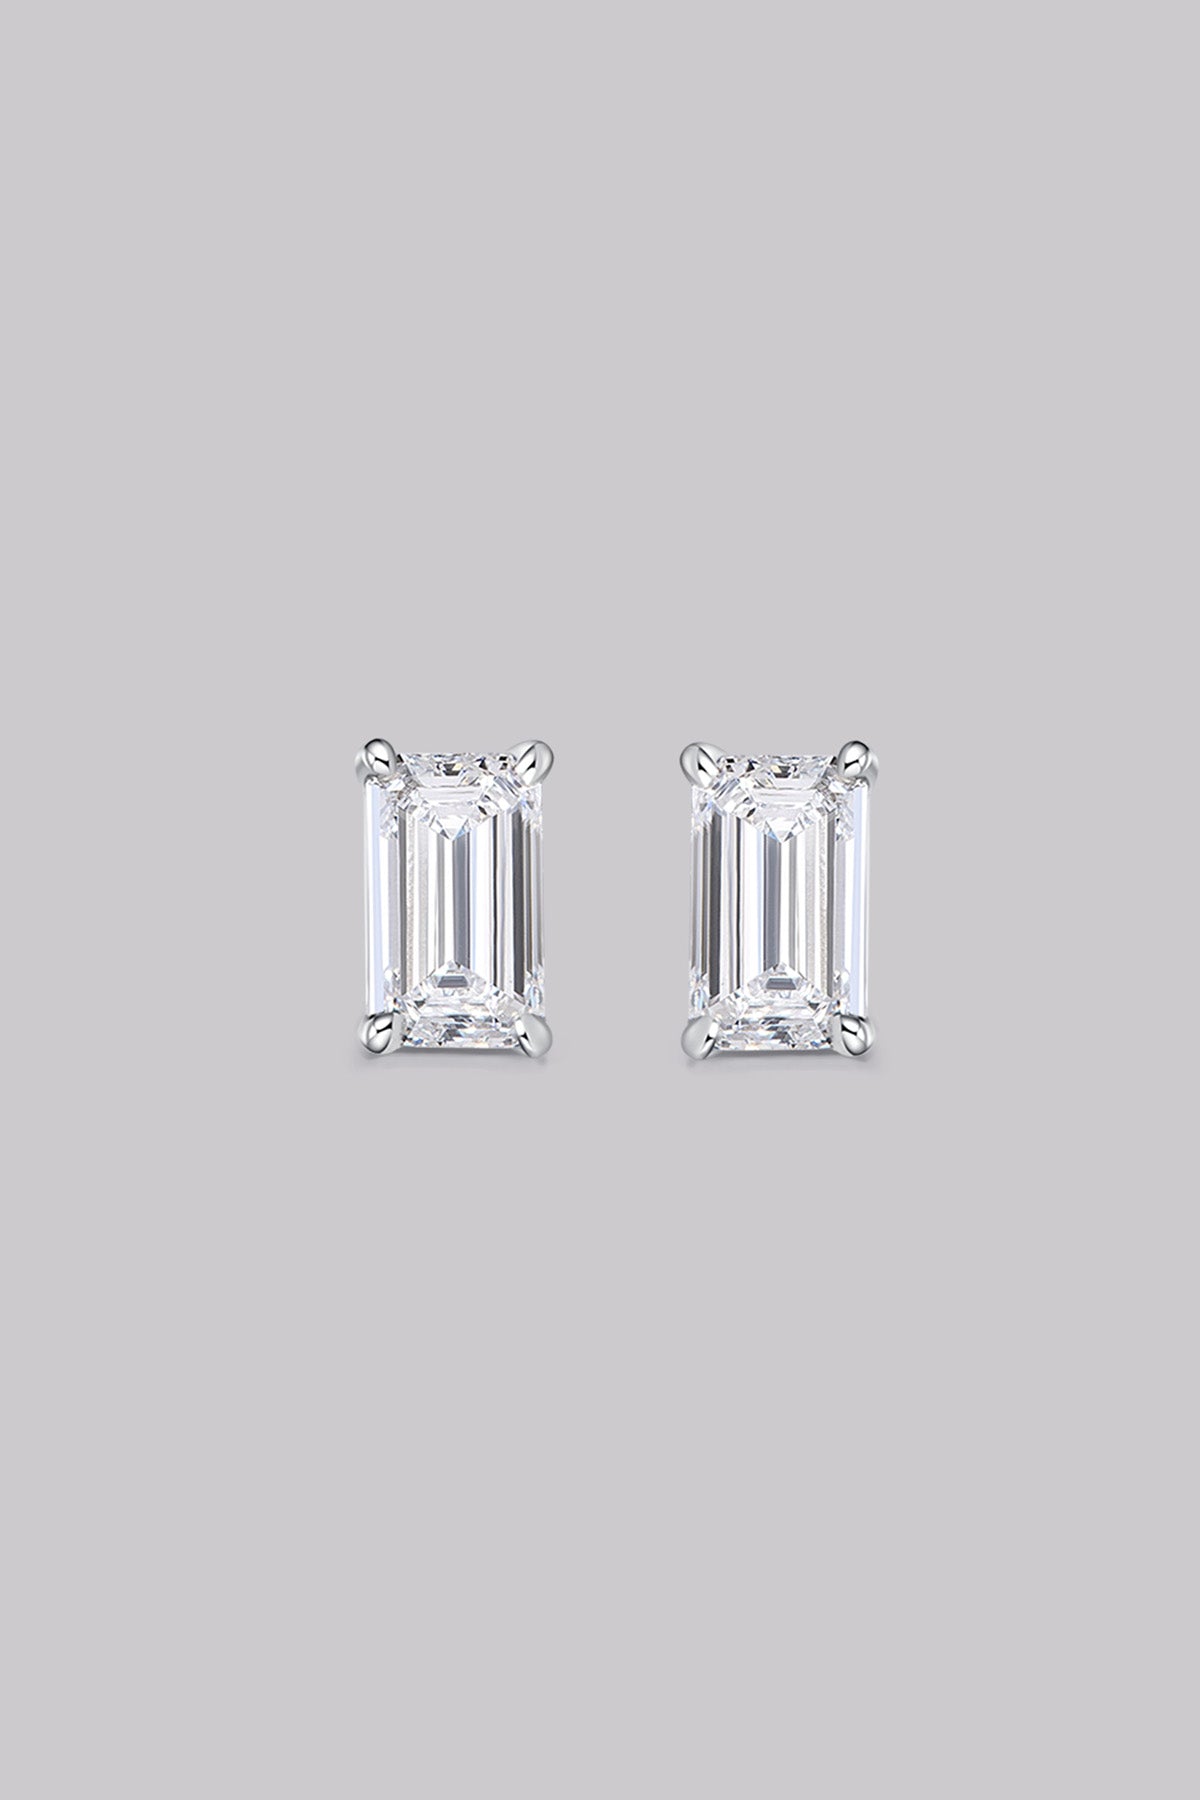 Emerald Diamond Stud Earrings (0.60ct)